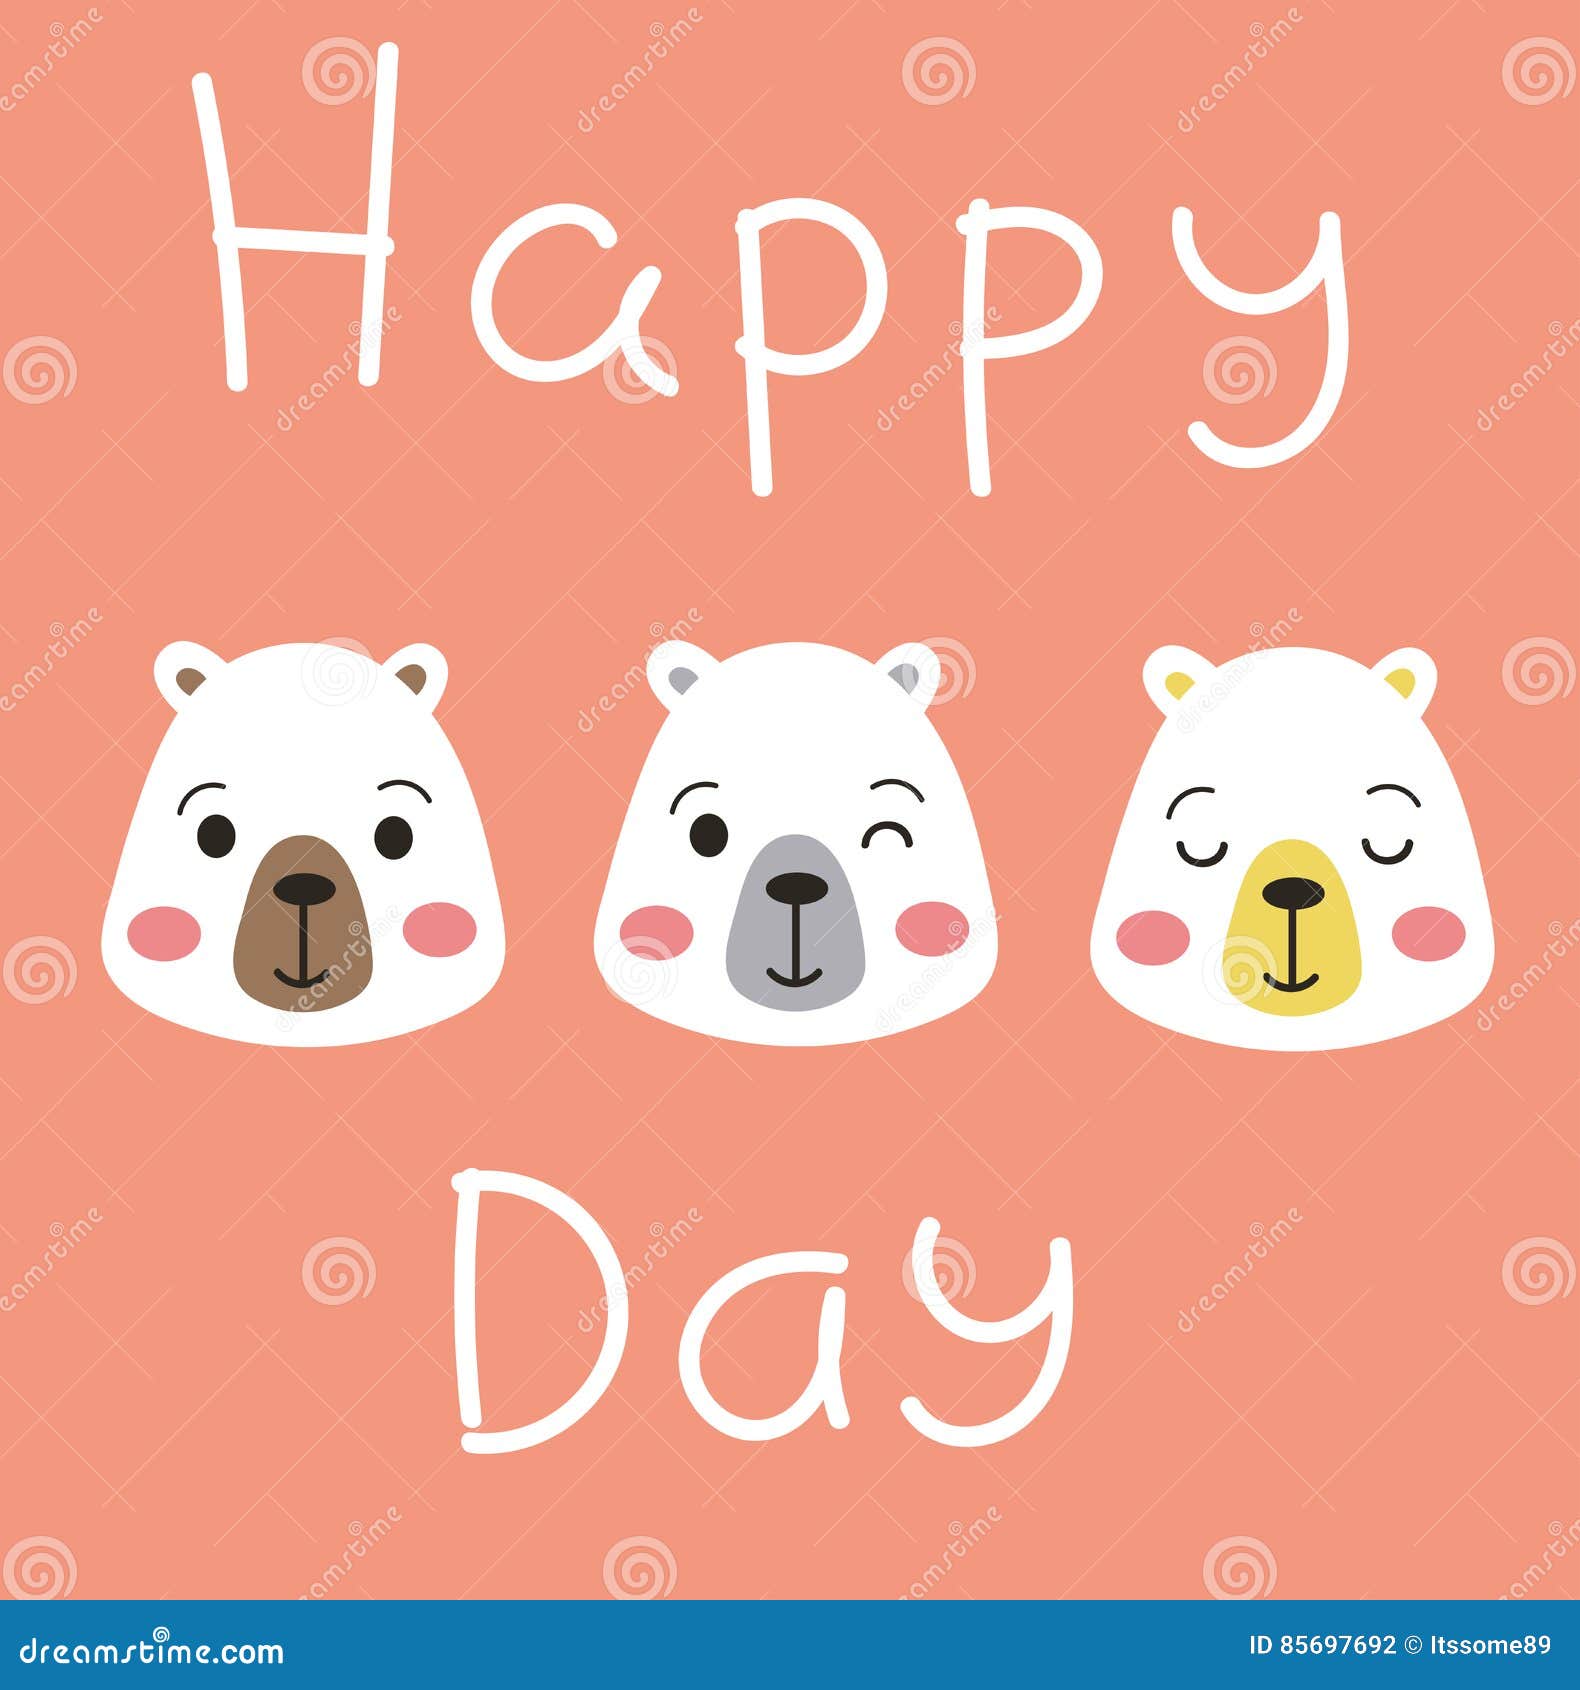 Happy Day ! stock illustration. Illustration of beautiful - 85697692